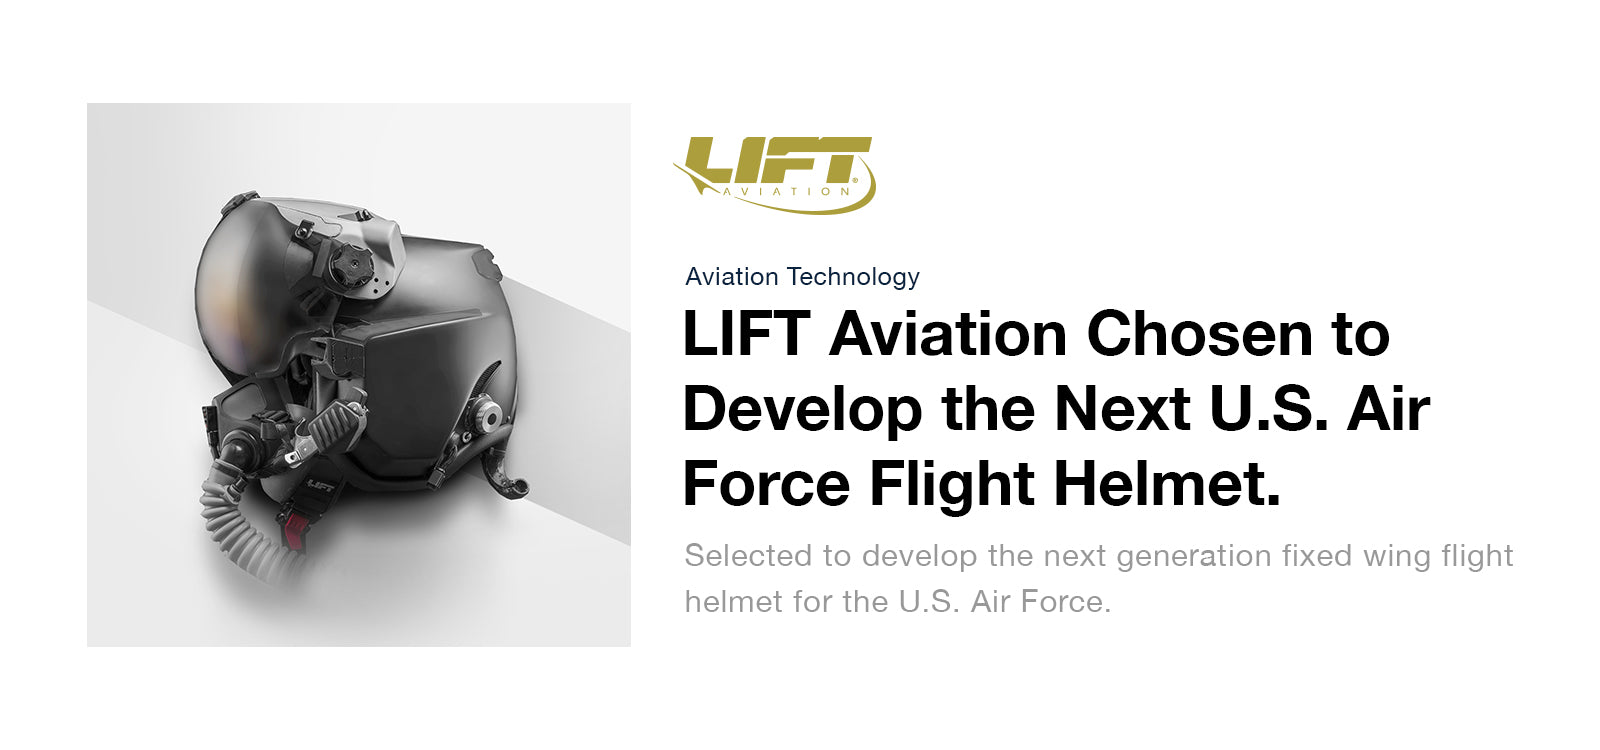 LIFT Aviation to design flight helmet for U.S. Air Force